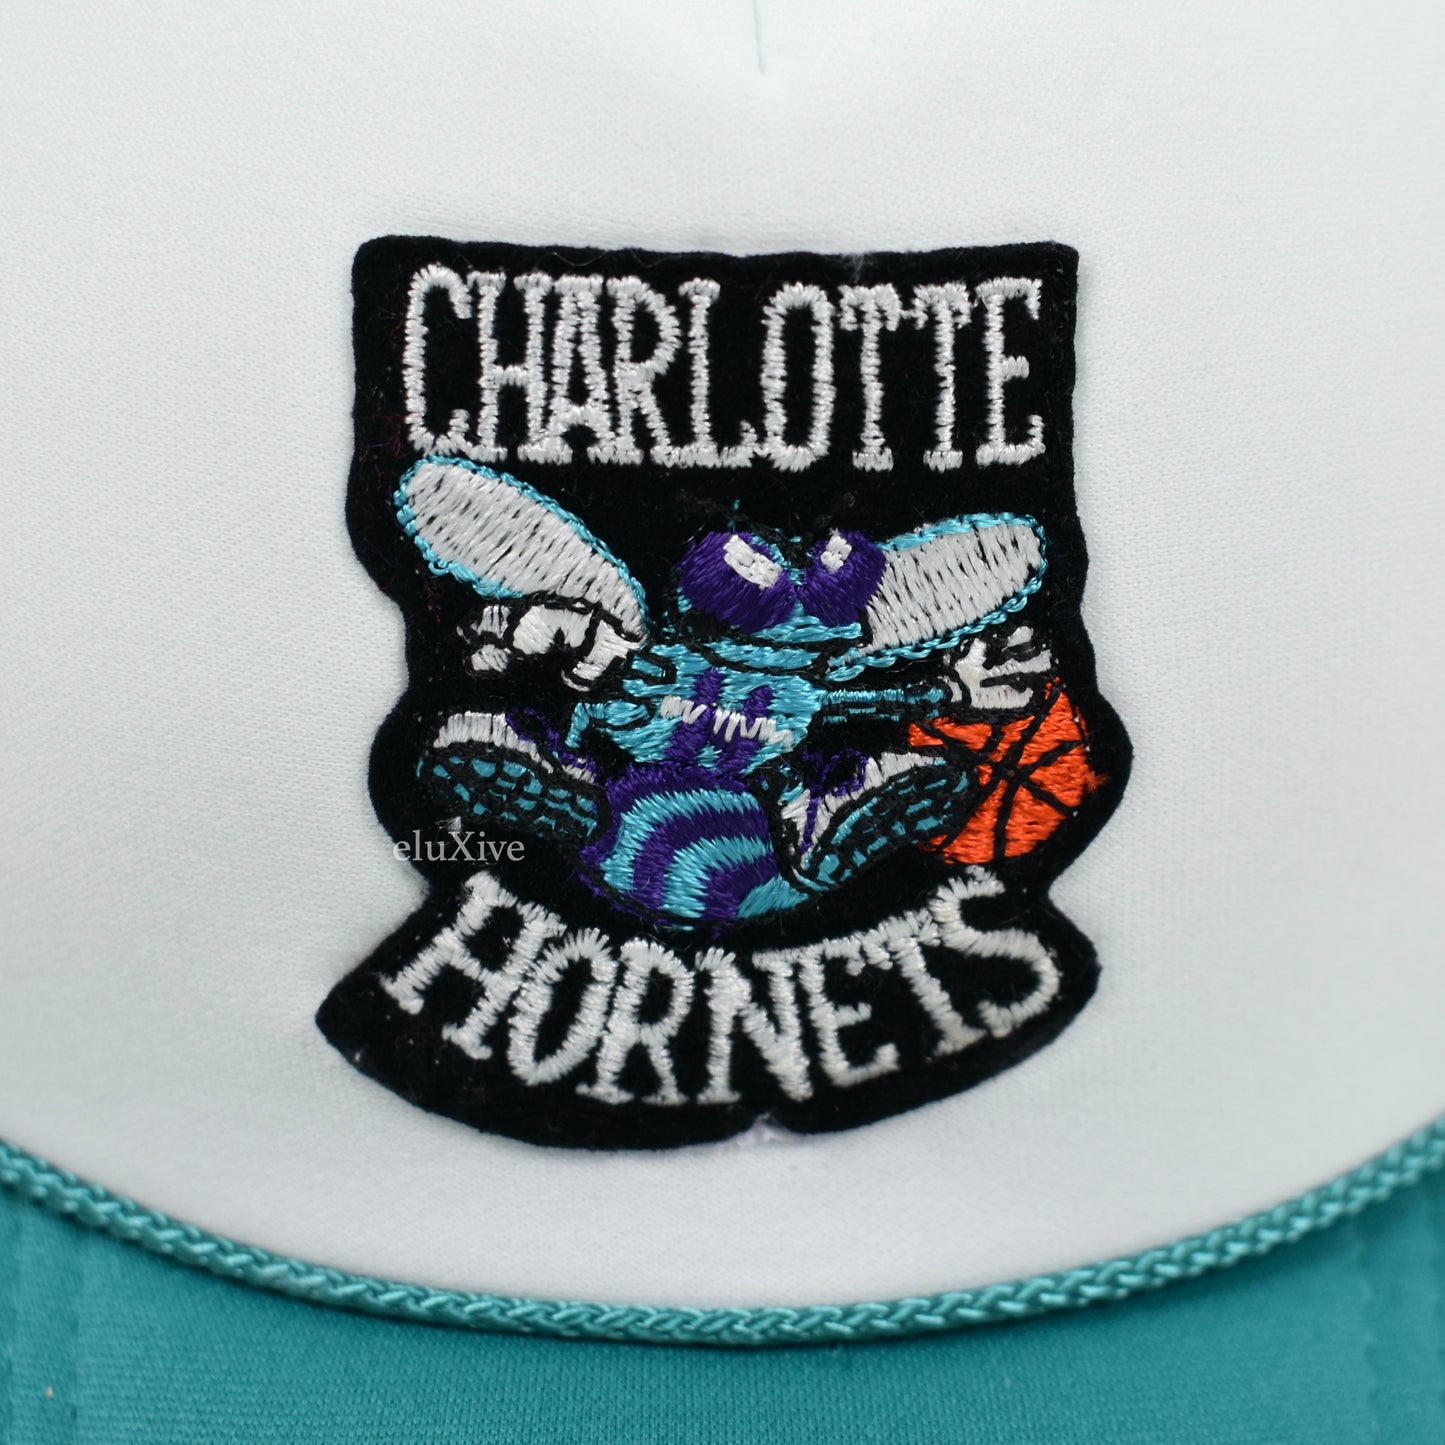 Retro - Charlotte Hornets 90s Vintage Patch Trucker Hat